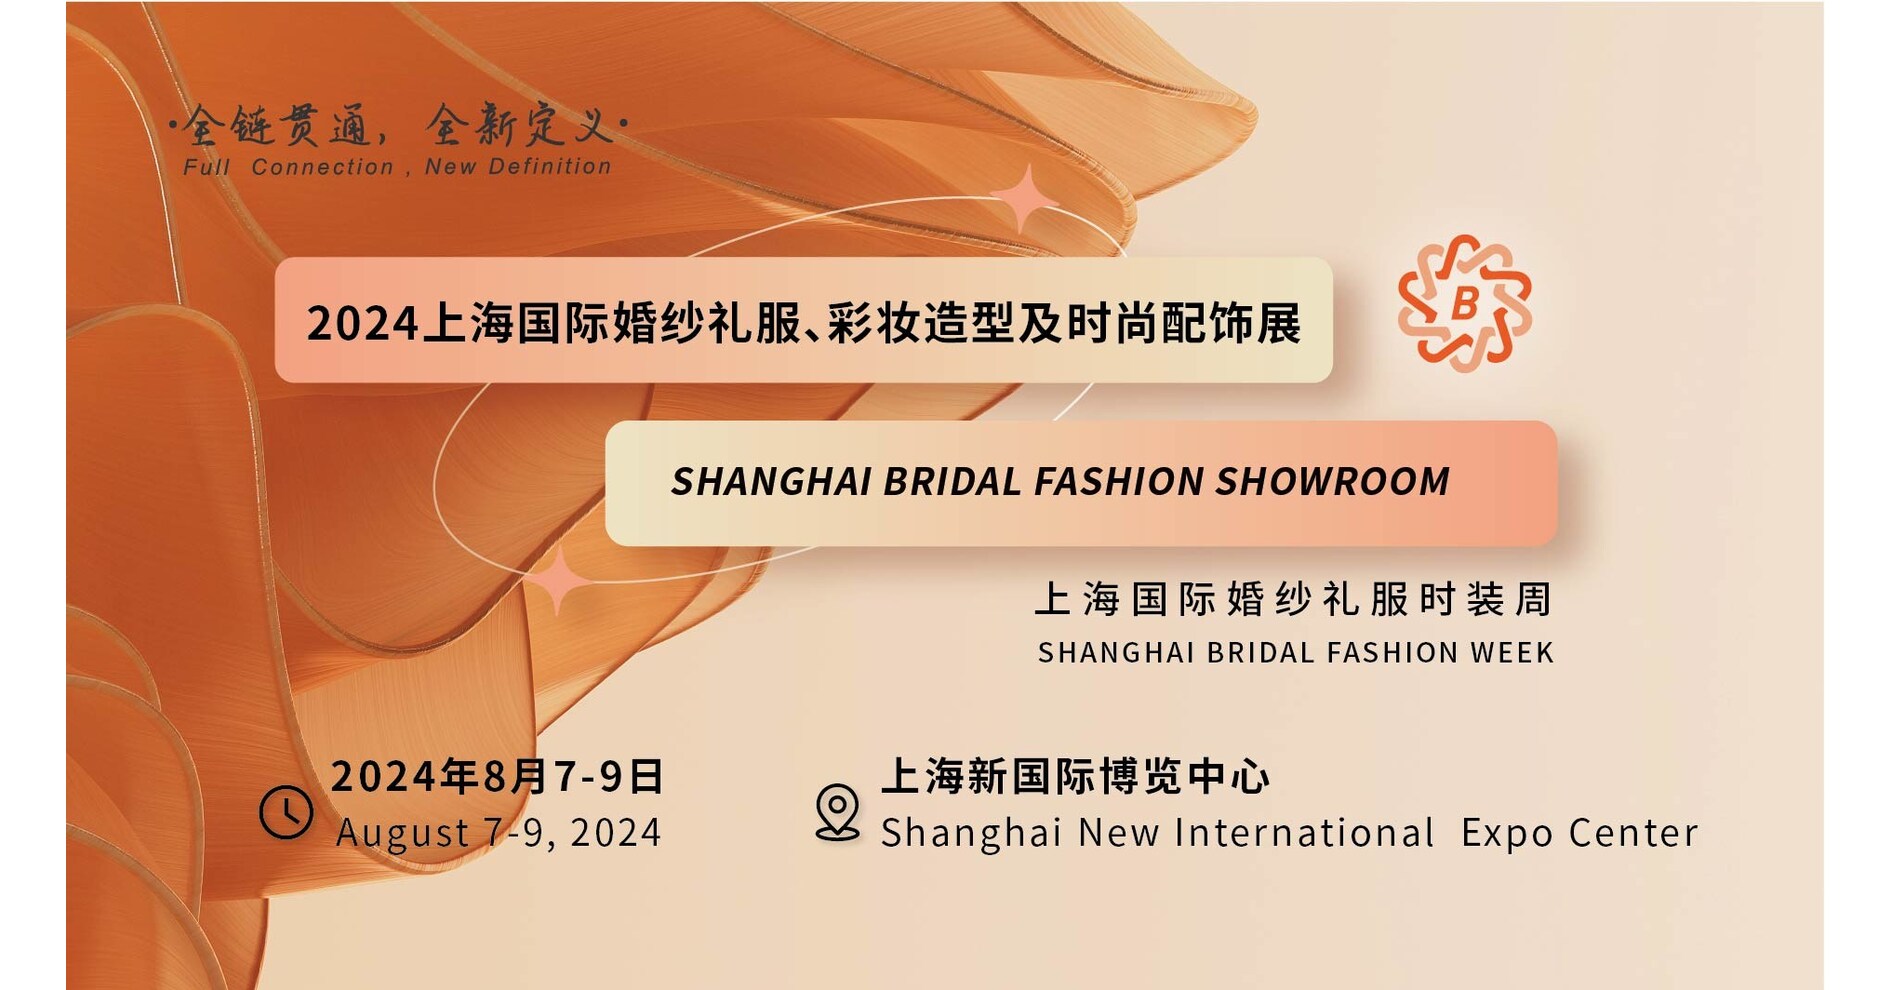 Coming Soon: 2024 Shanghai Bridal Fashion Showroom Gathering of World Brands